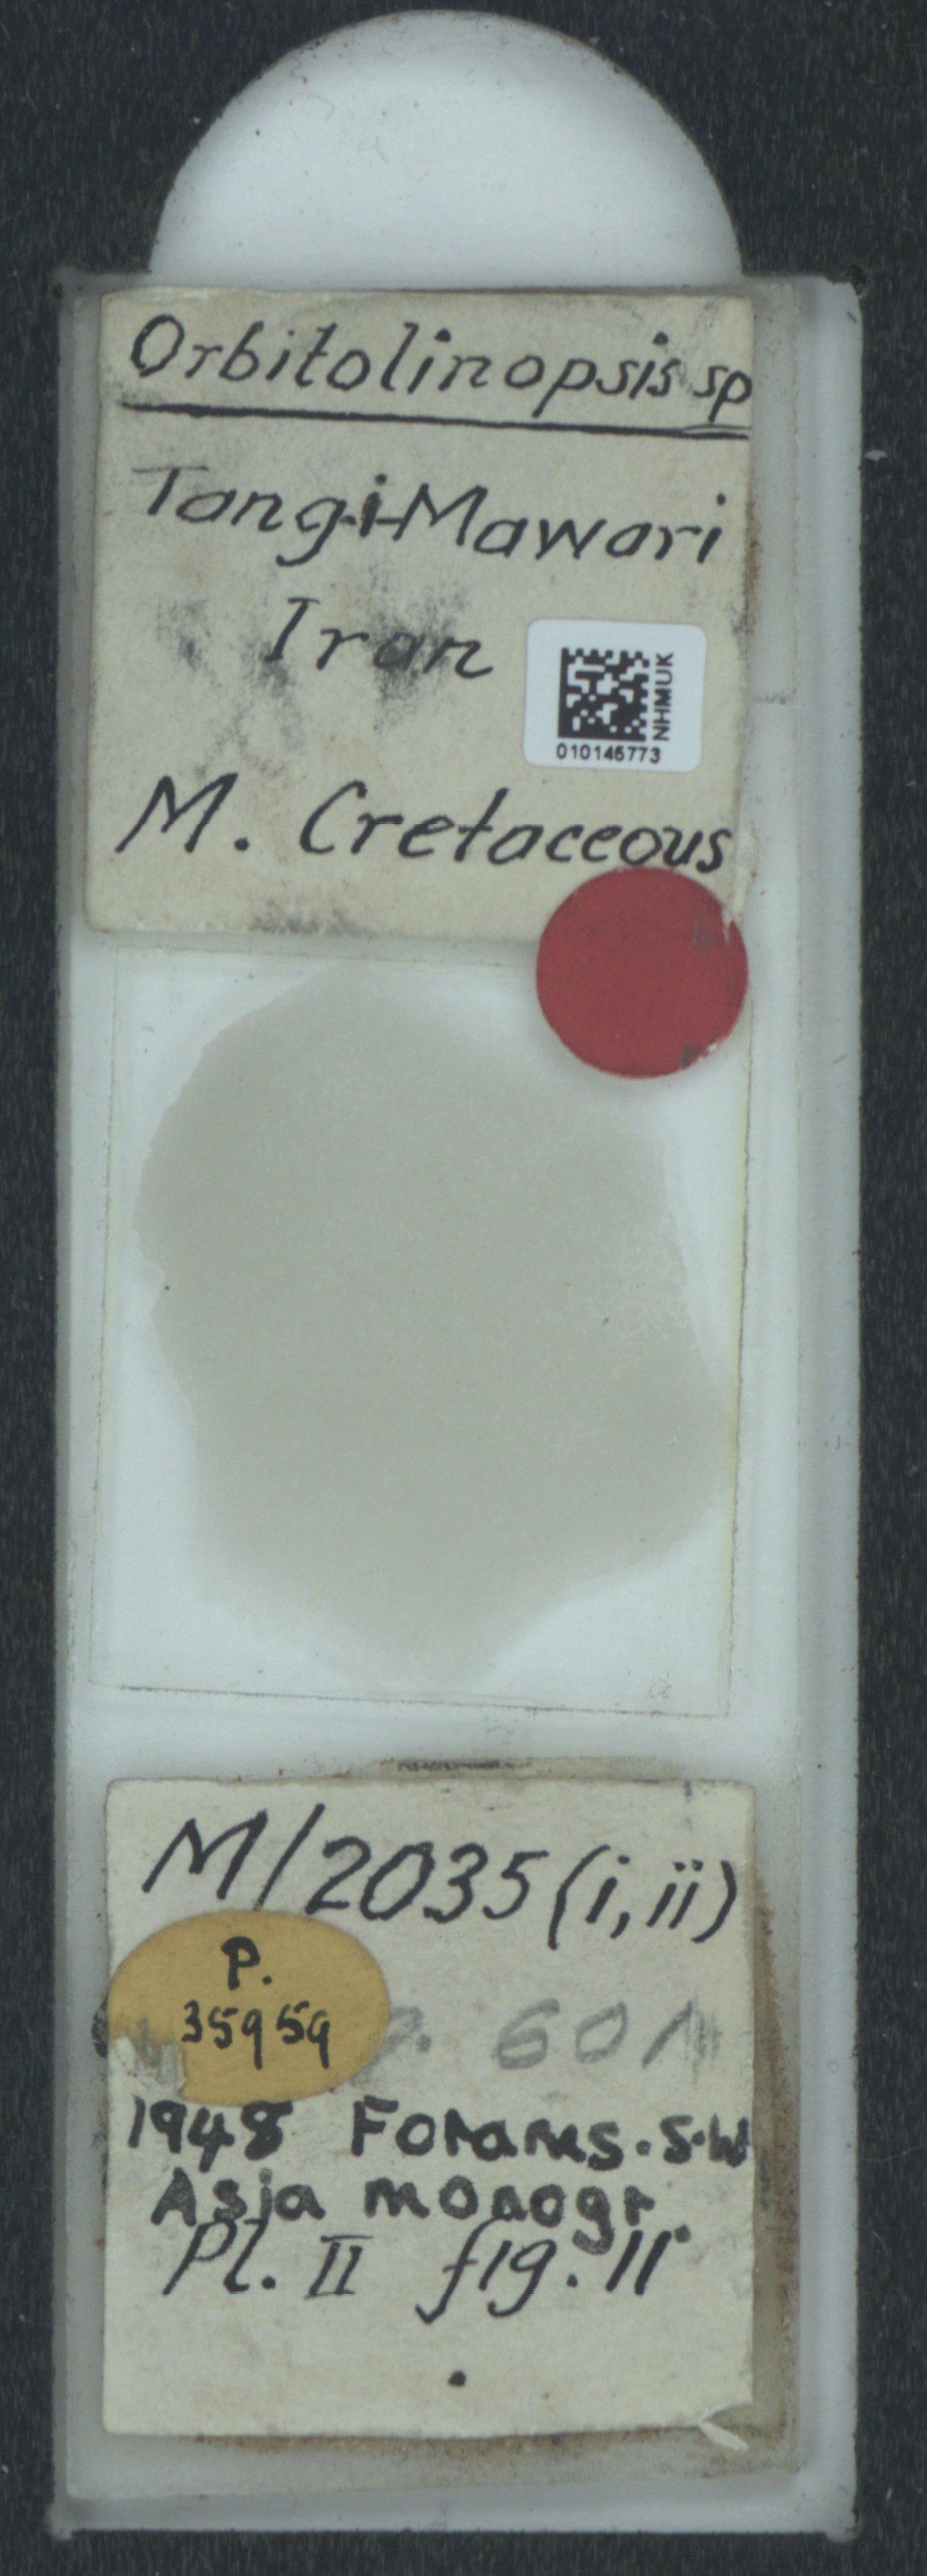 To NHMUK collection (Orbitolinopsis Silvestri, 1932; NHMUK:ecatalogue:2315284)